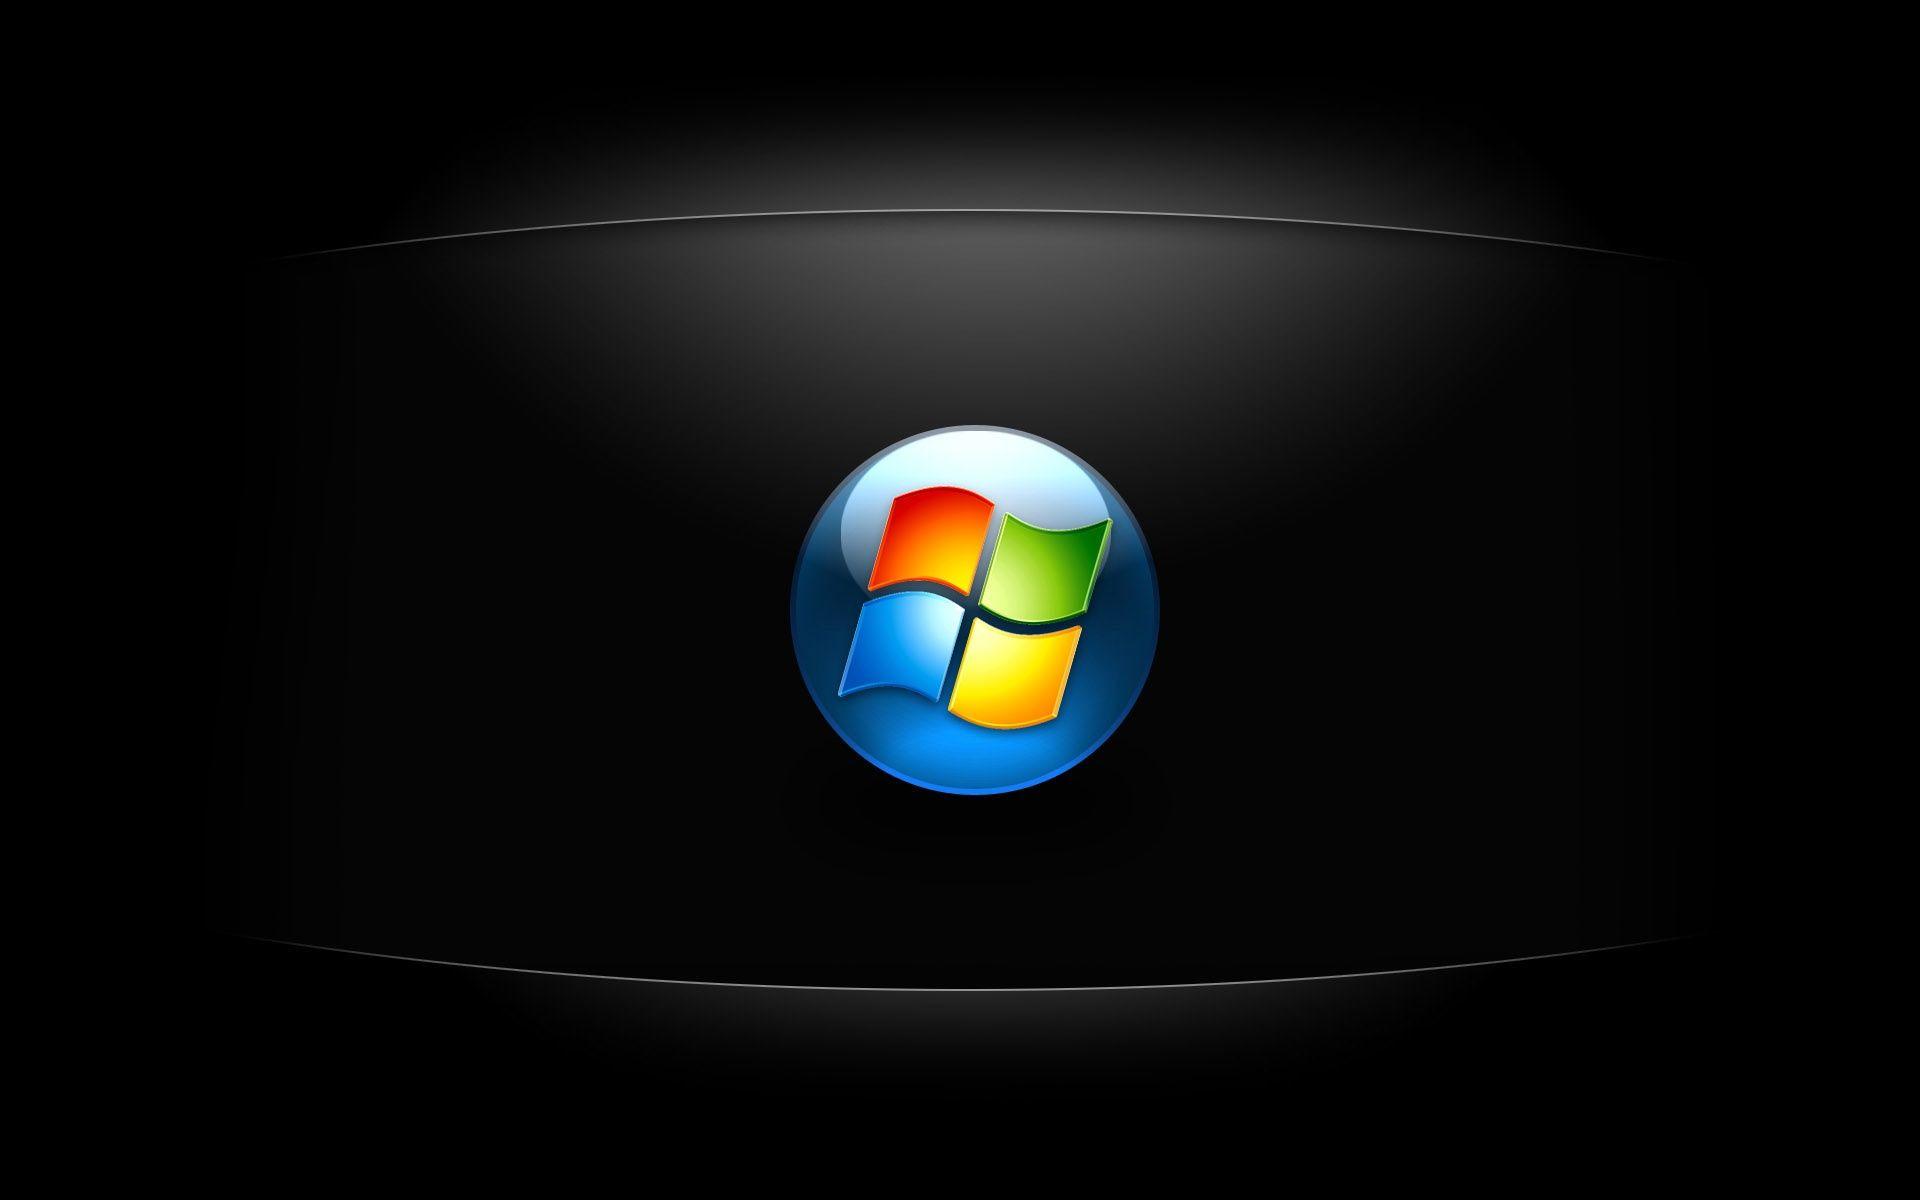 Dark Windows Logo - Dark Windows 7 HD Wallpaper - HD Wallpapers